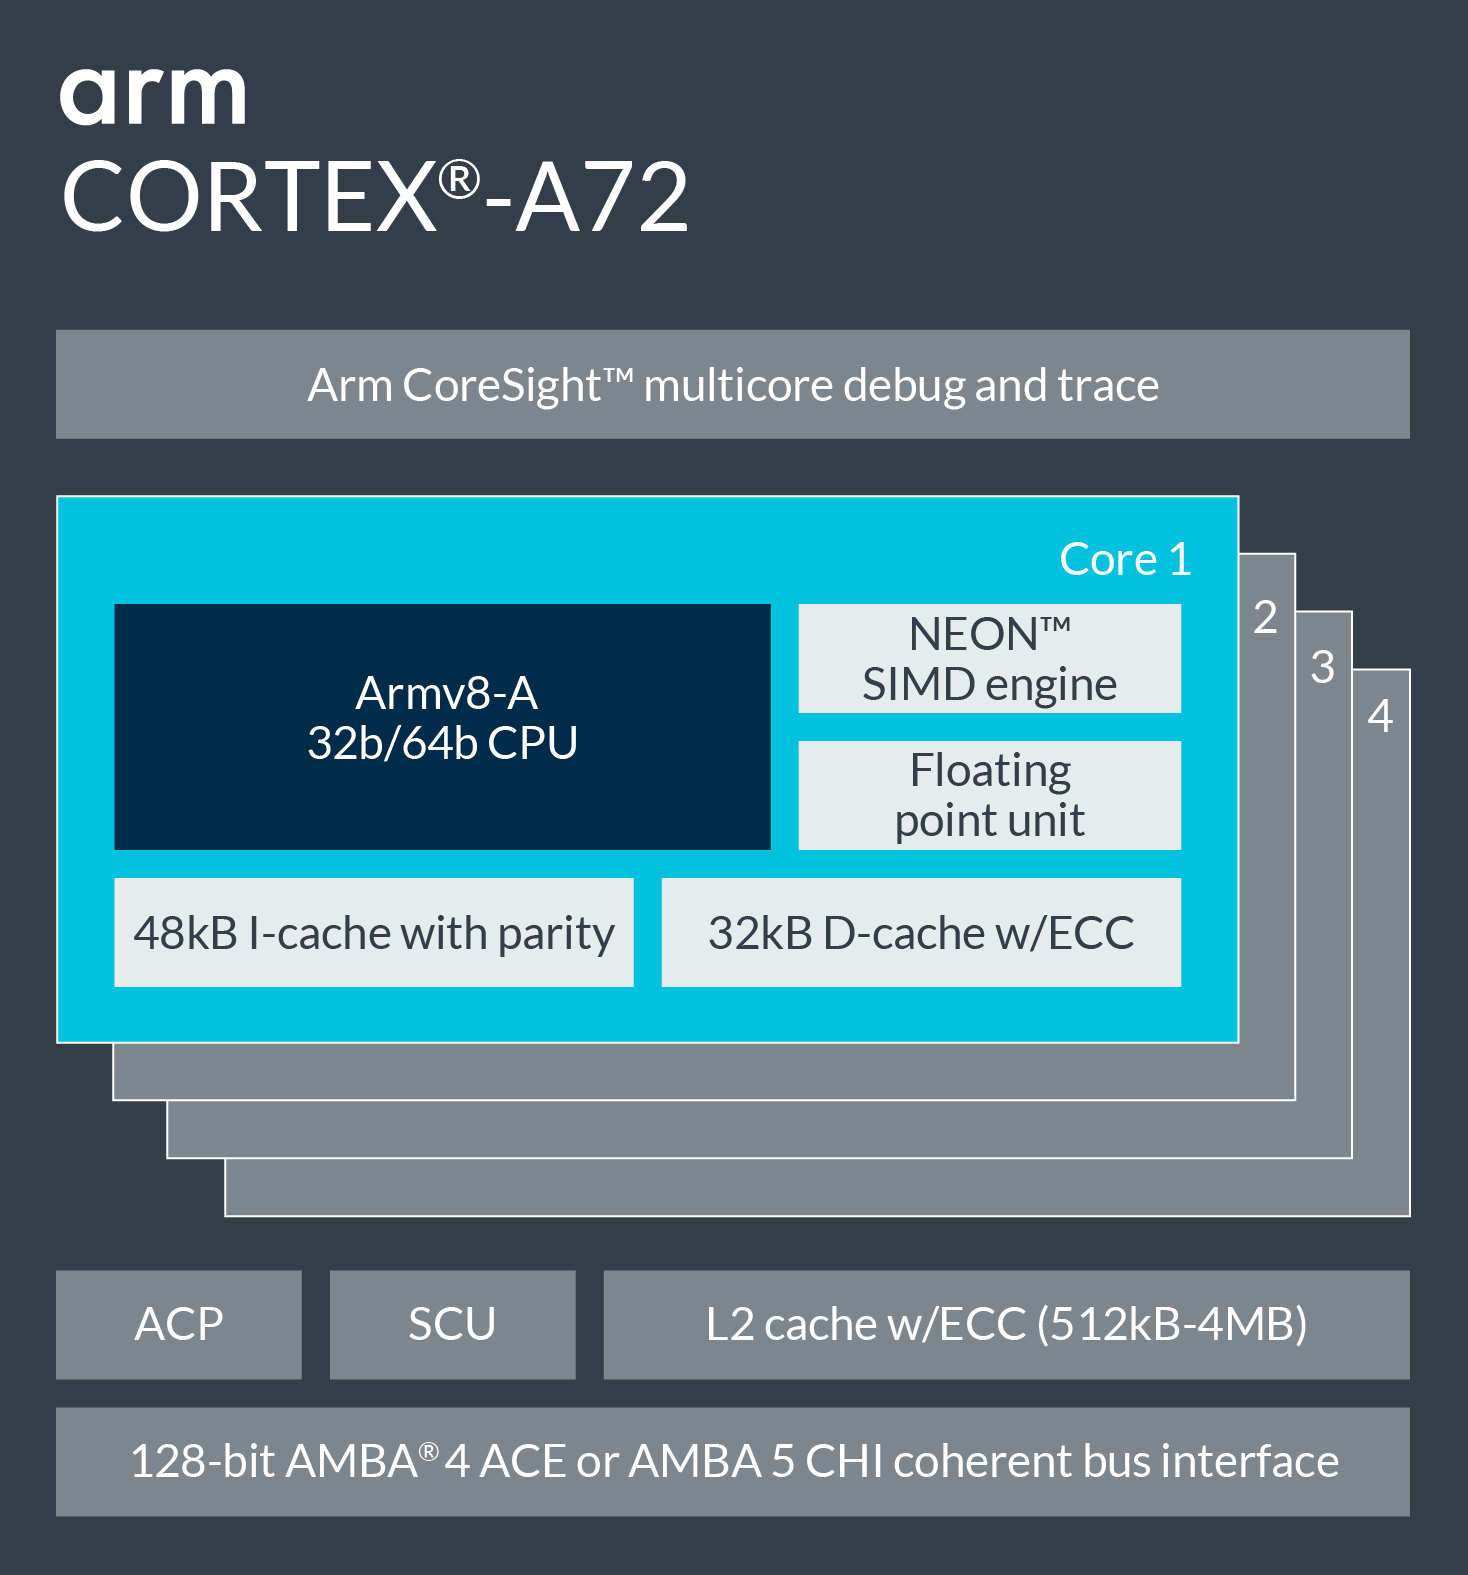 Information on arm Cortex-A72.